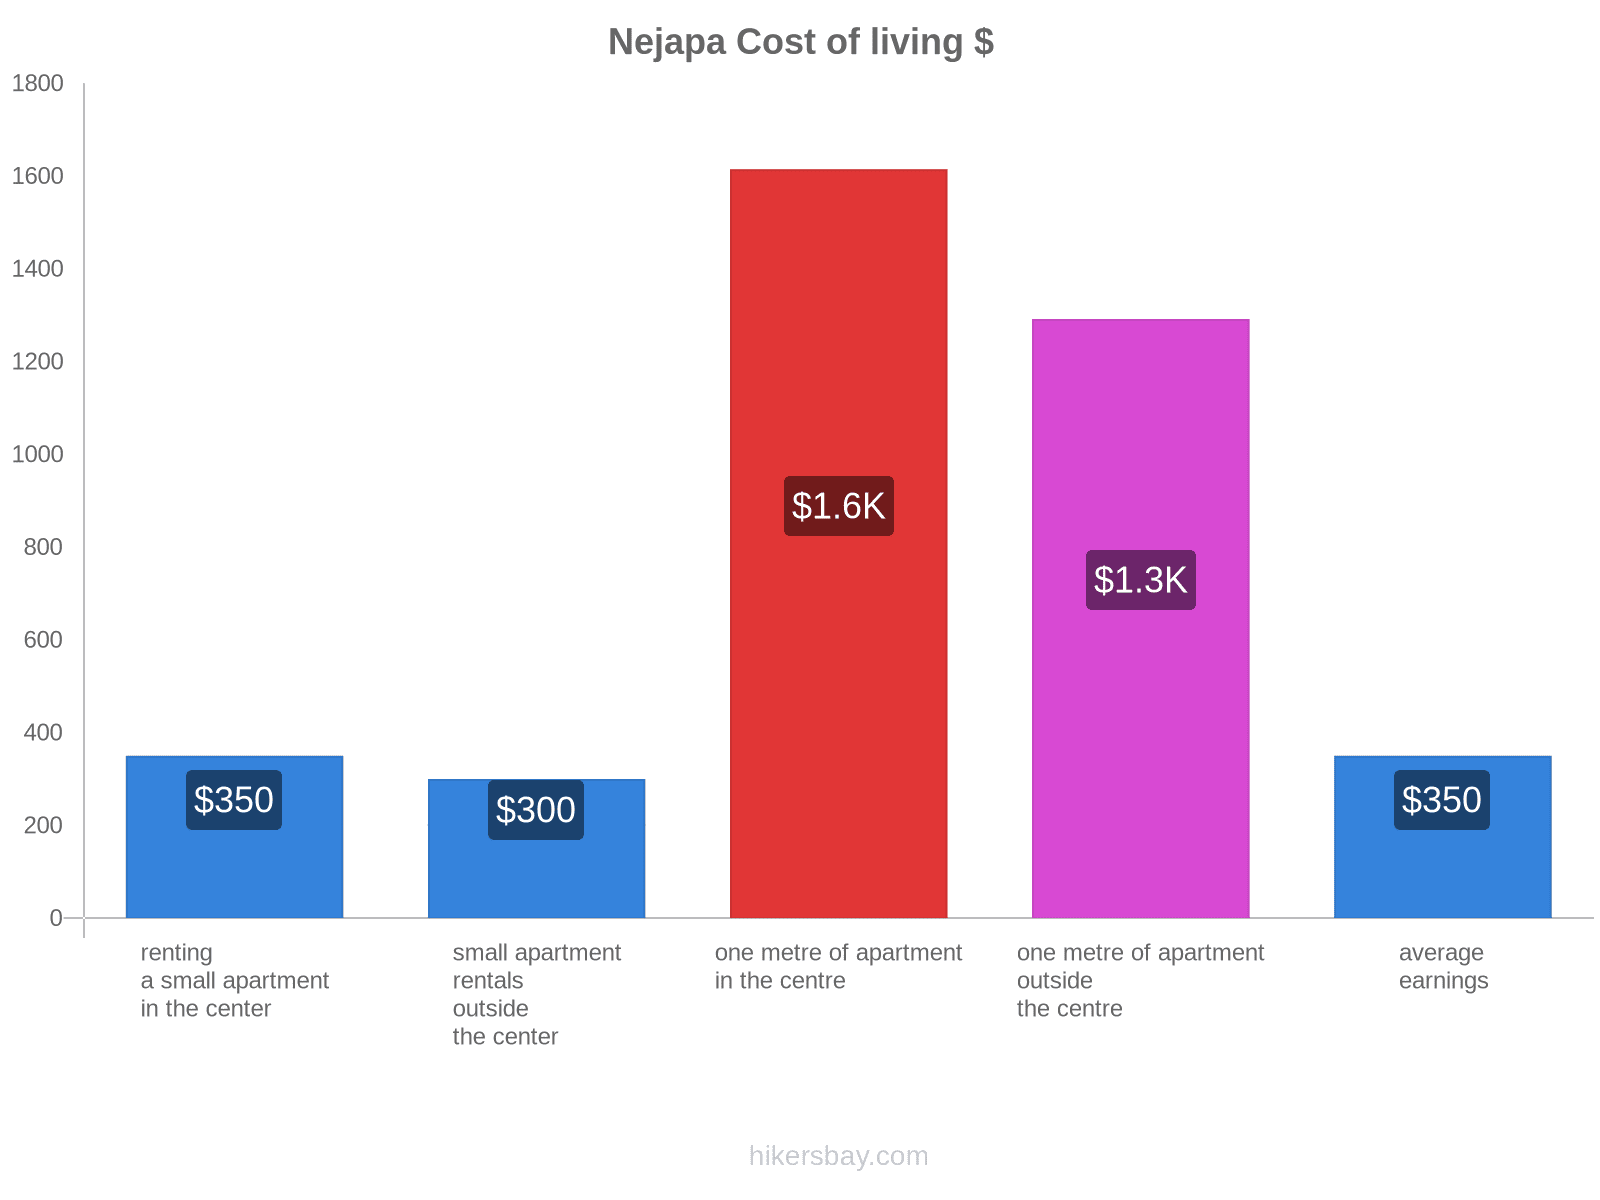 Nejapa cost of living hikersbay.com